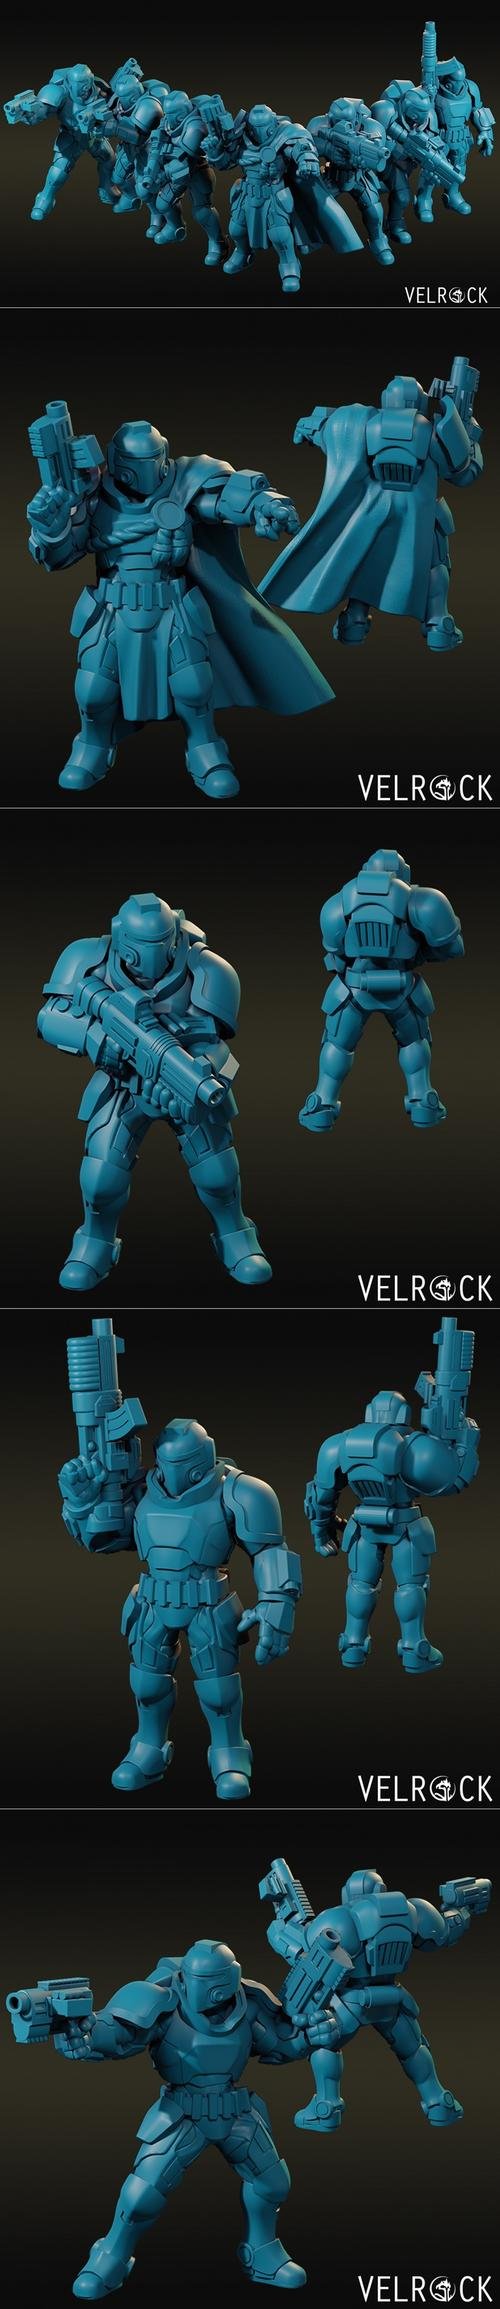 Velrock Art - Tempest Marine Basic Unit 3D Print